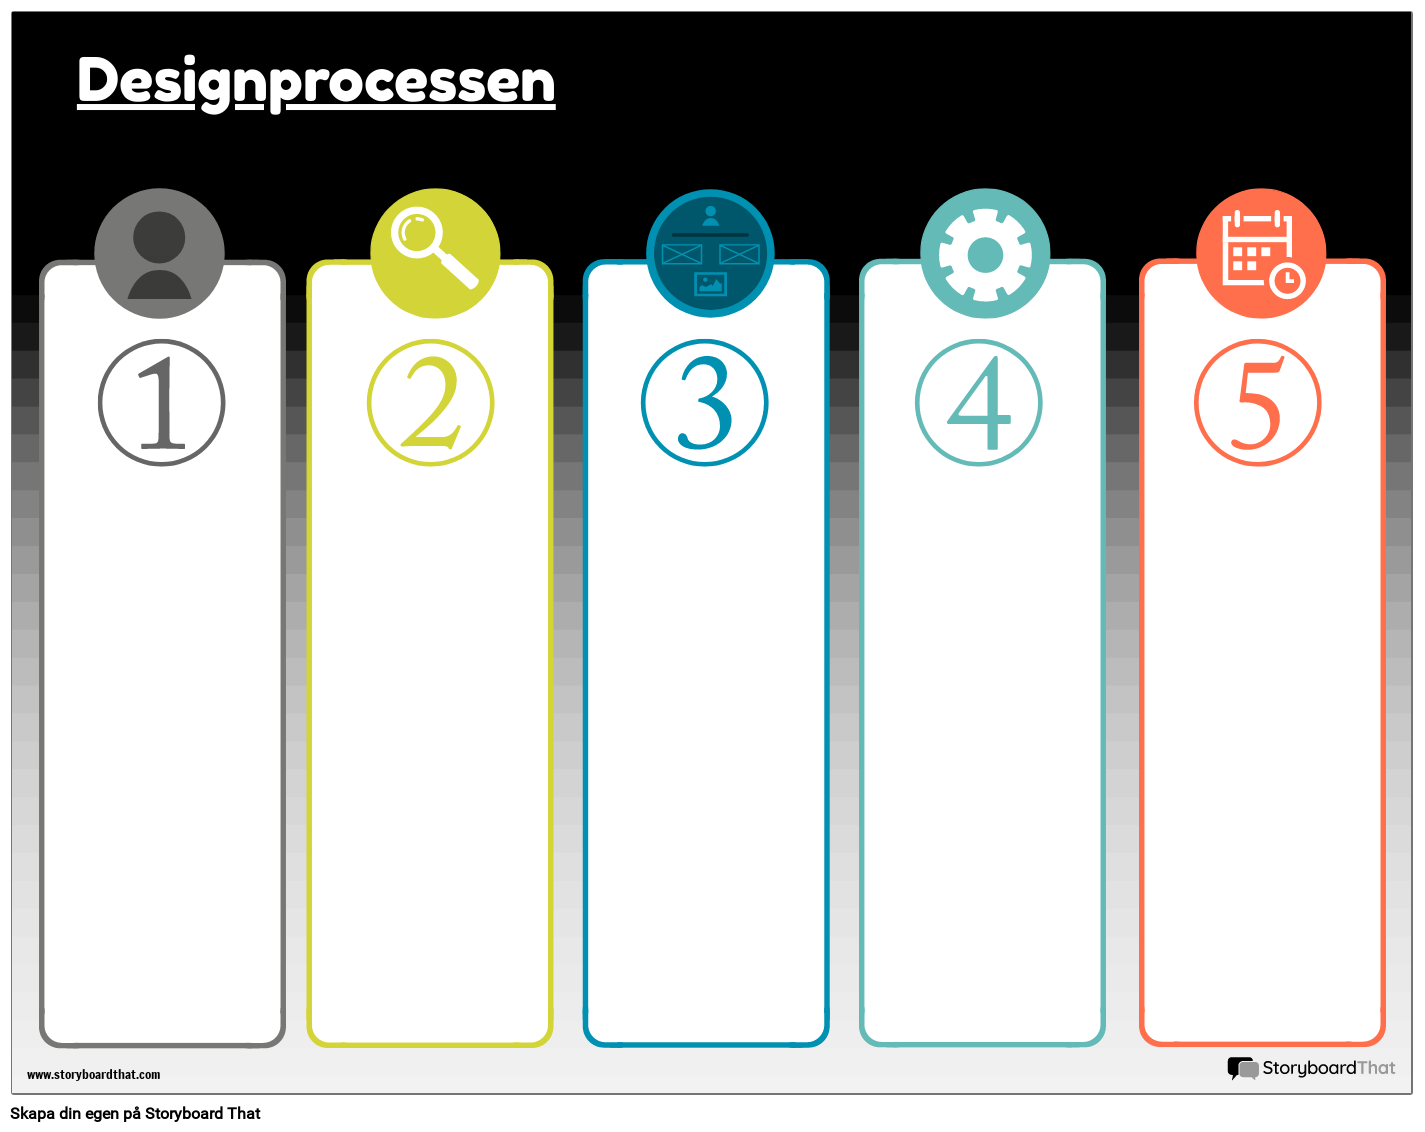 Designprocess 1